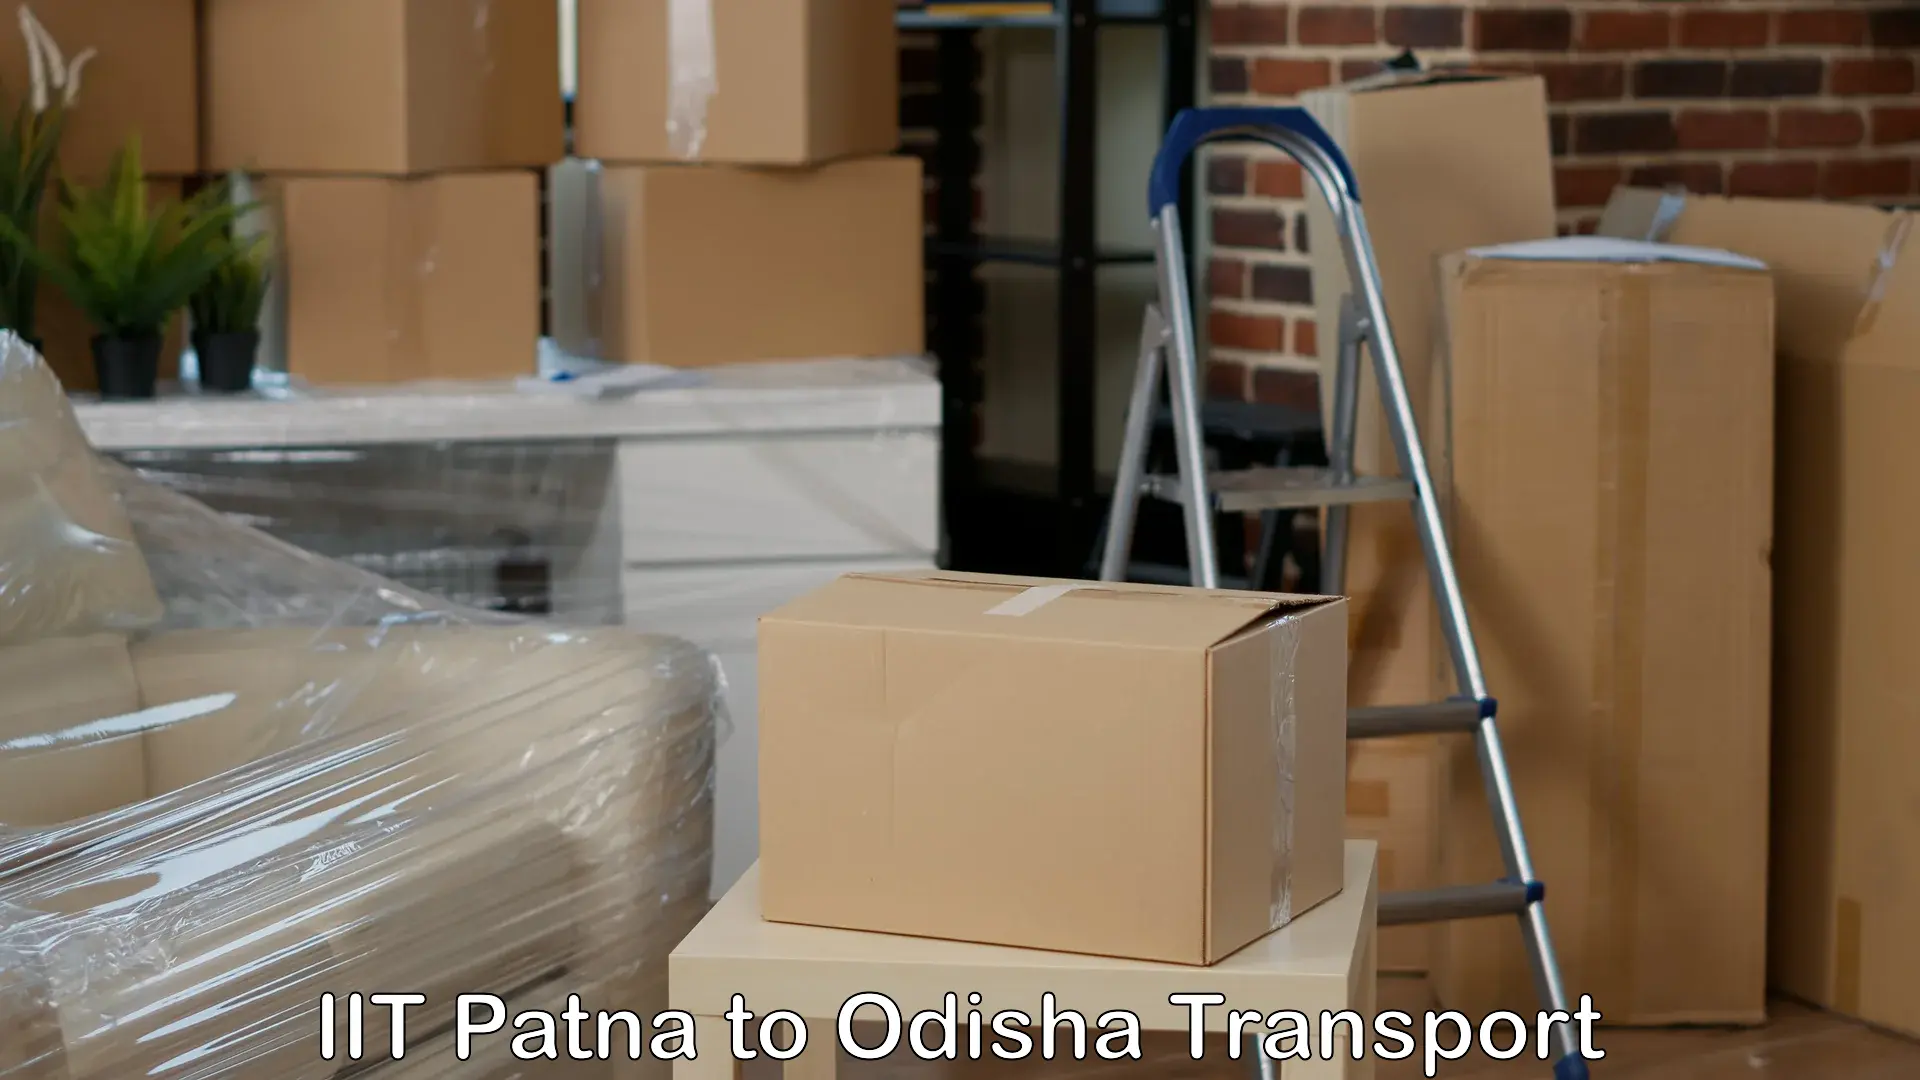 Delivery service IIT Patna to Sohela